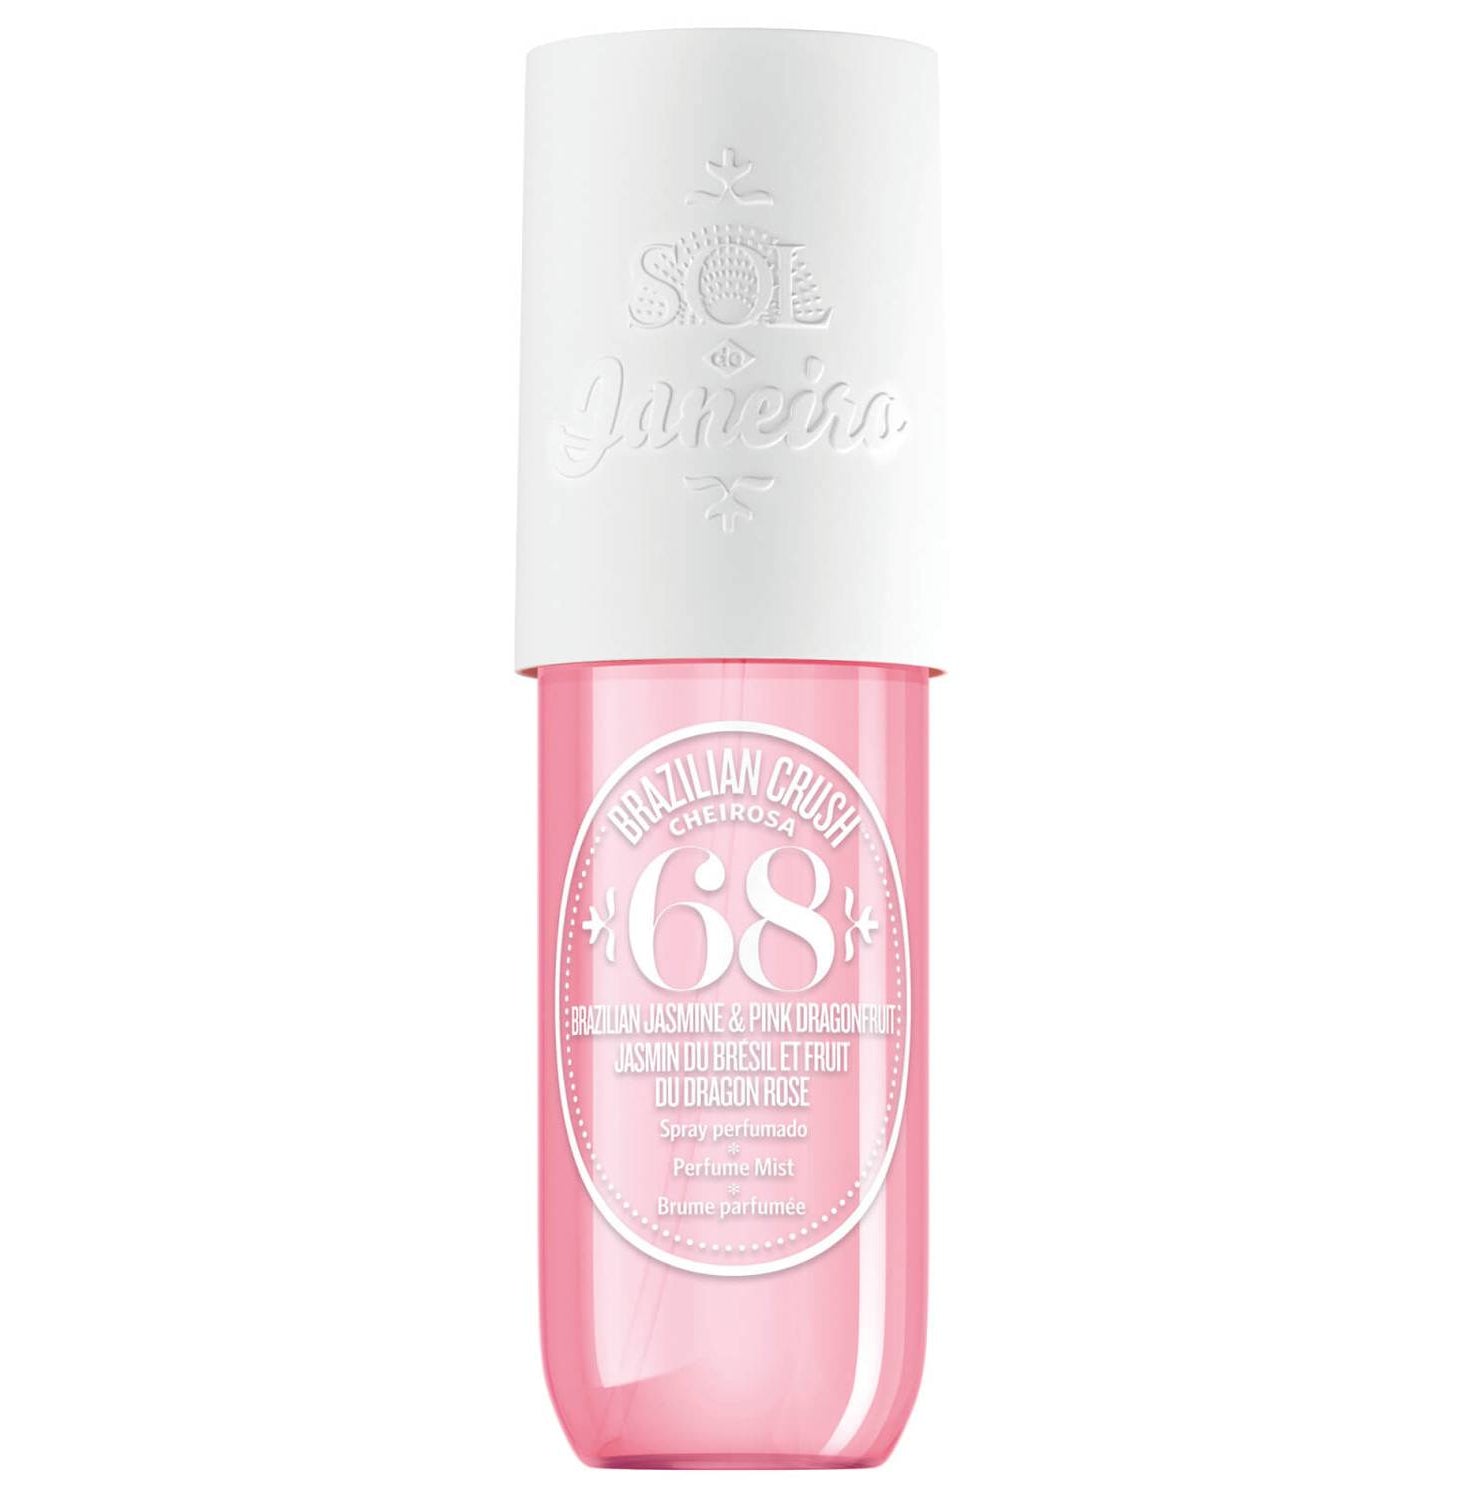 Sol de Janeiro Cheirosa 68 Perfume Mist 240ml Grace Beauty